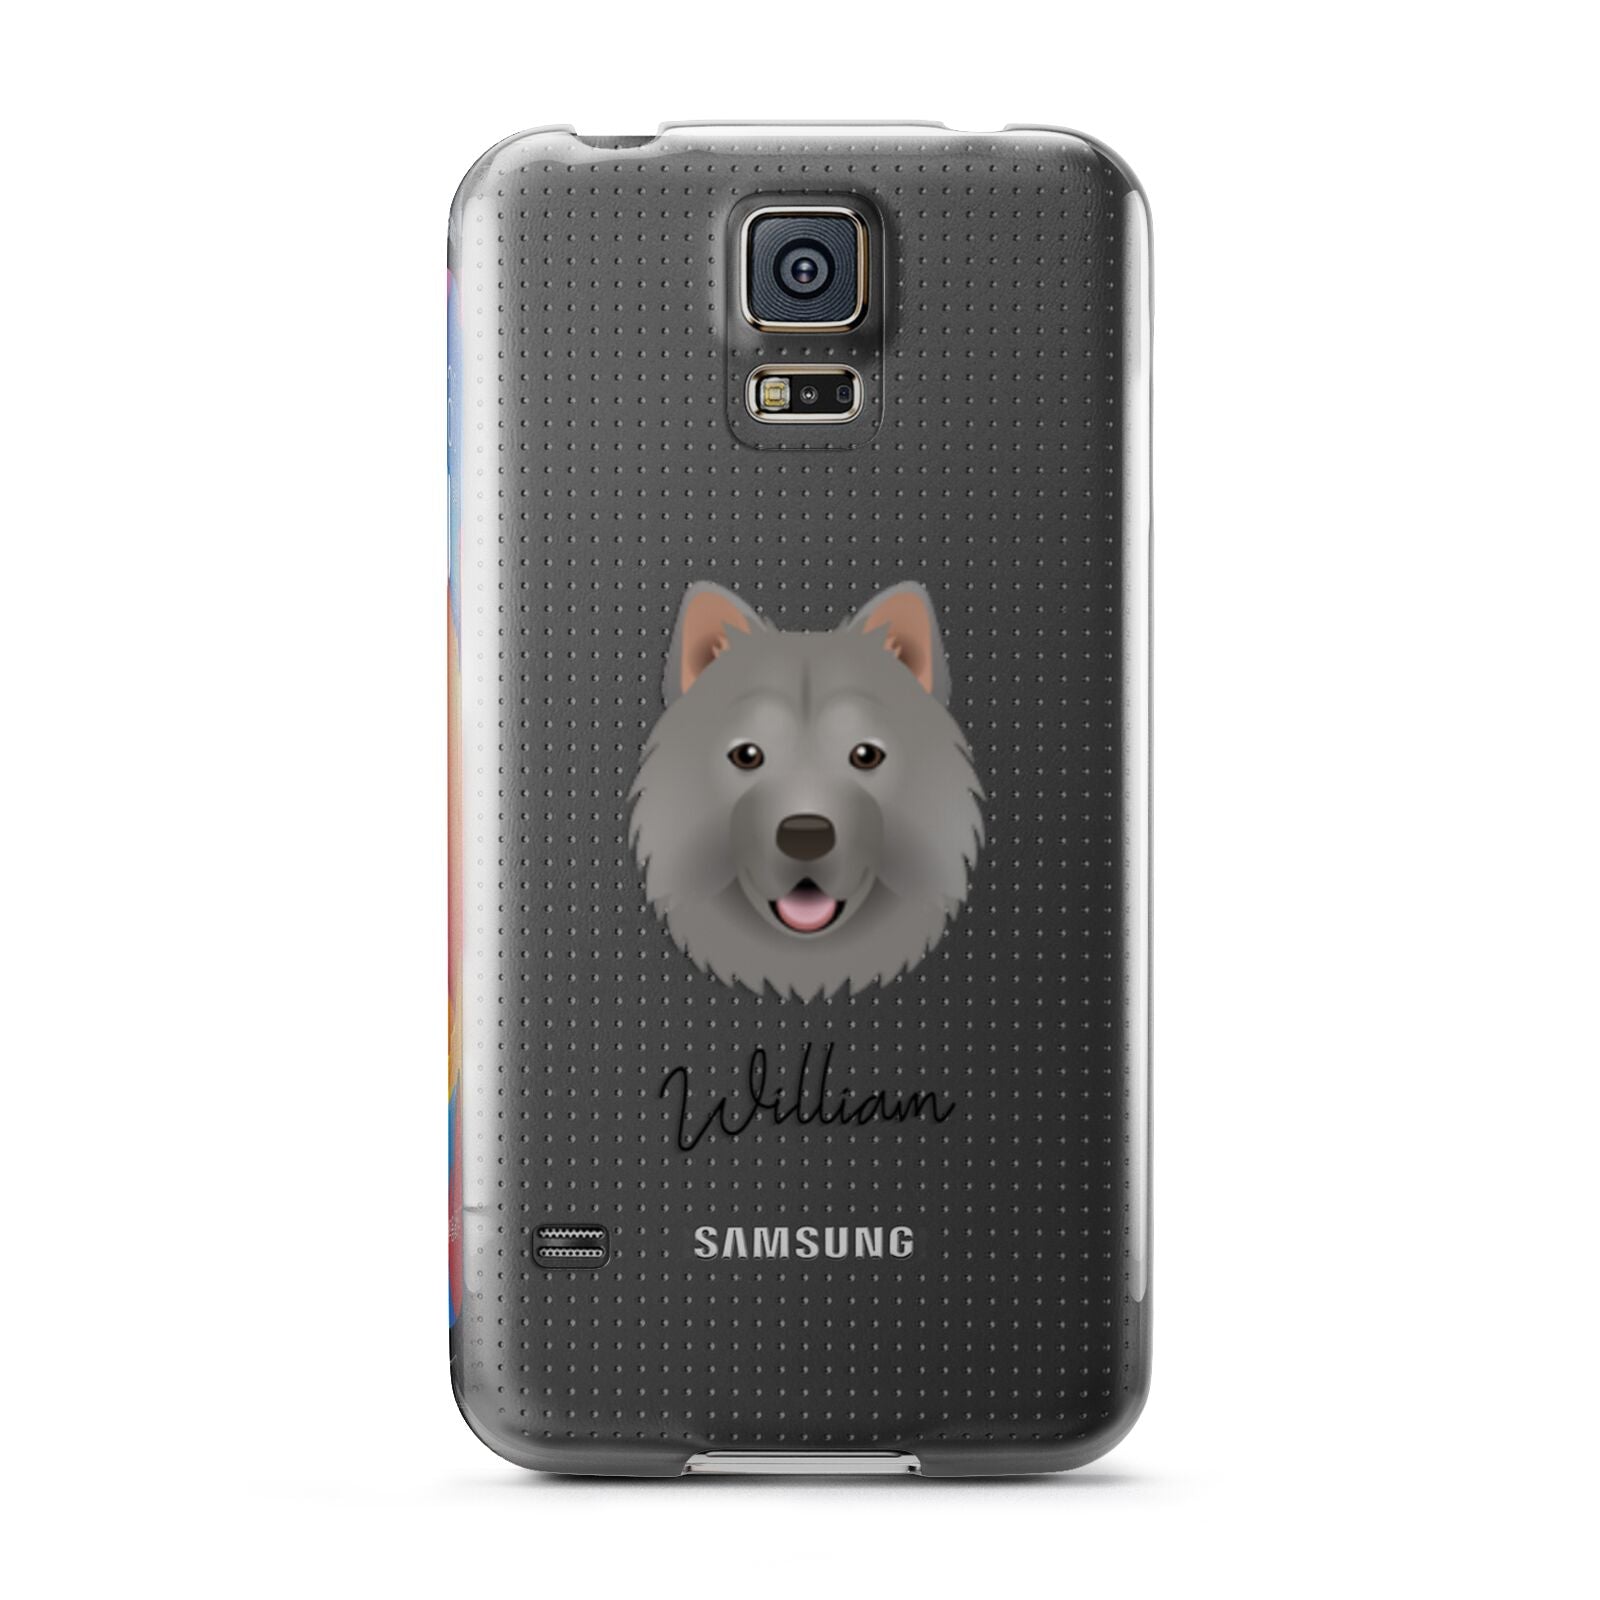 Chusky Personalised Samsung Galaxy S5 Case